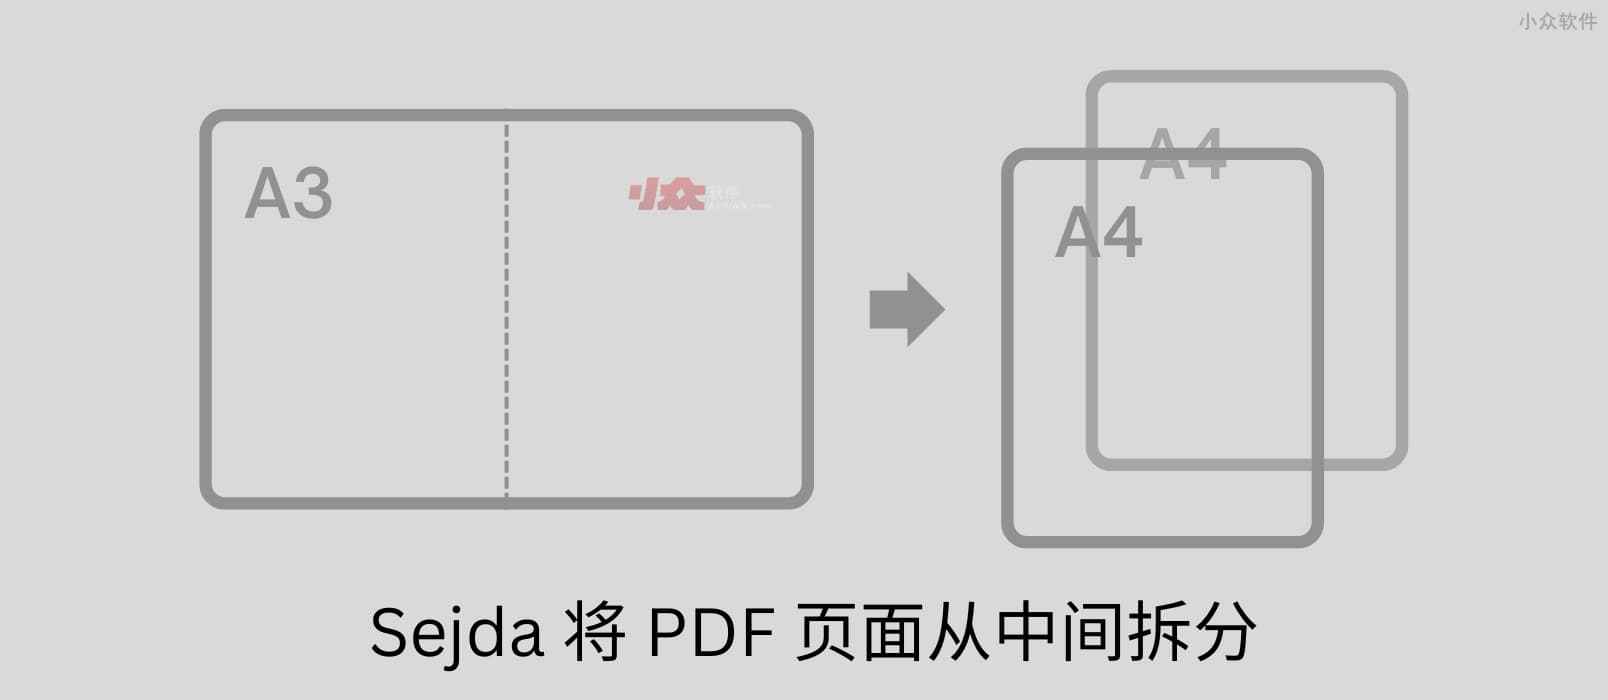 Sejda – 将 PDF 页面从中间拆分：A3 尺寸试卷切割为 A4 尺寸，方便打印